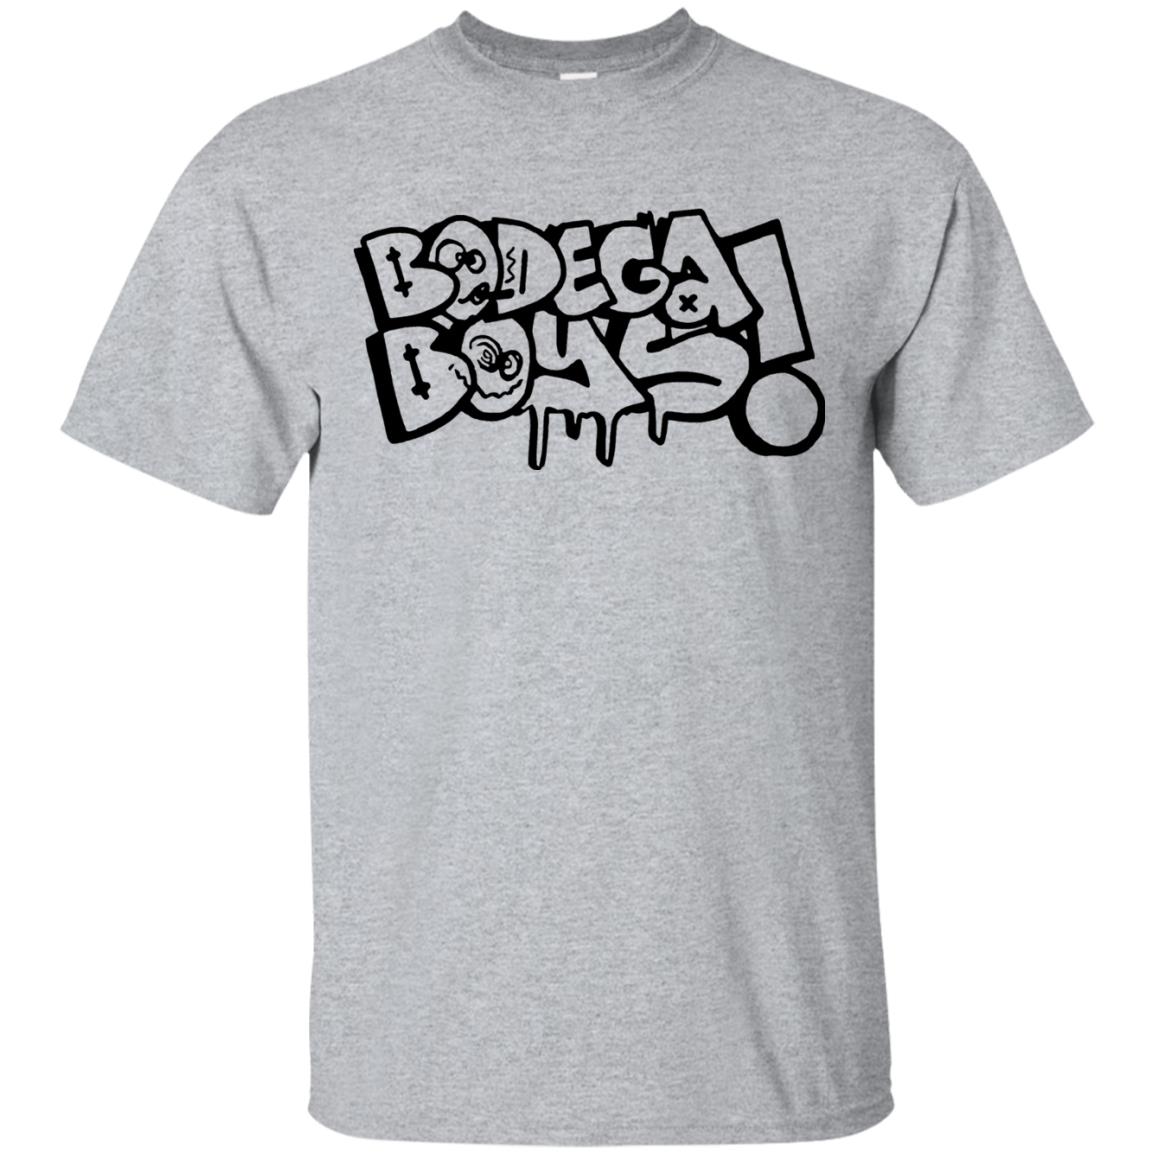 bodega boys t shirt - sport grey